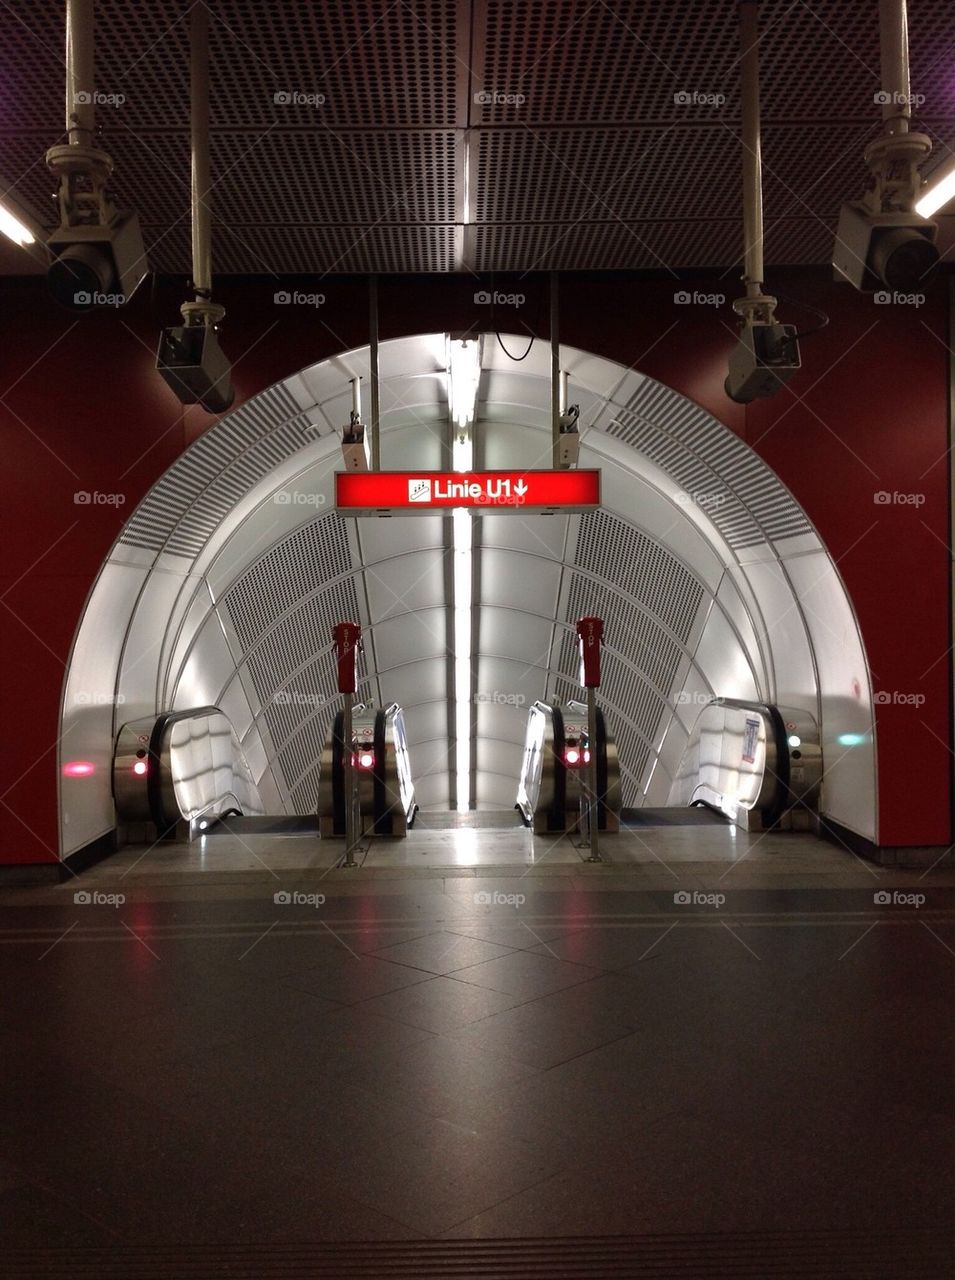 Vienna's metro